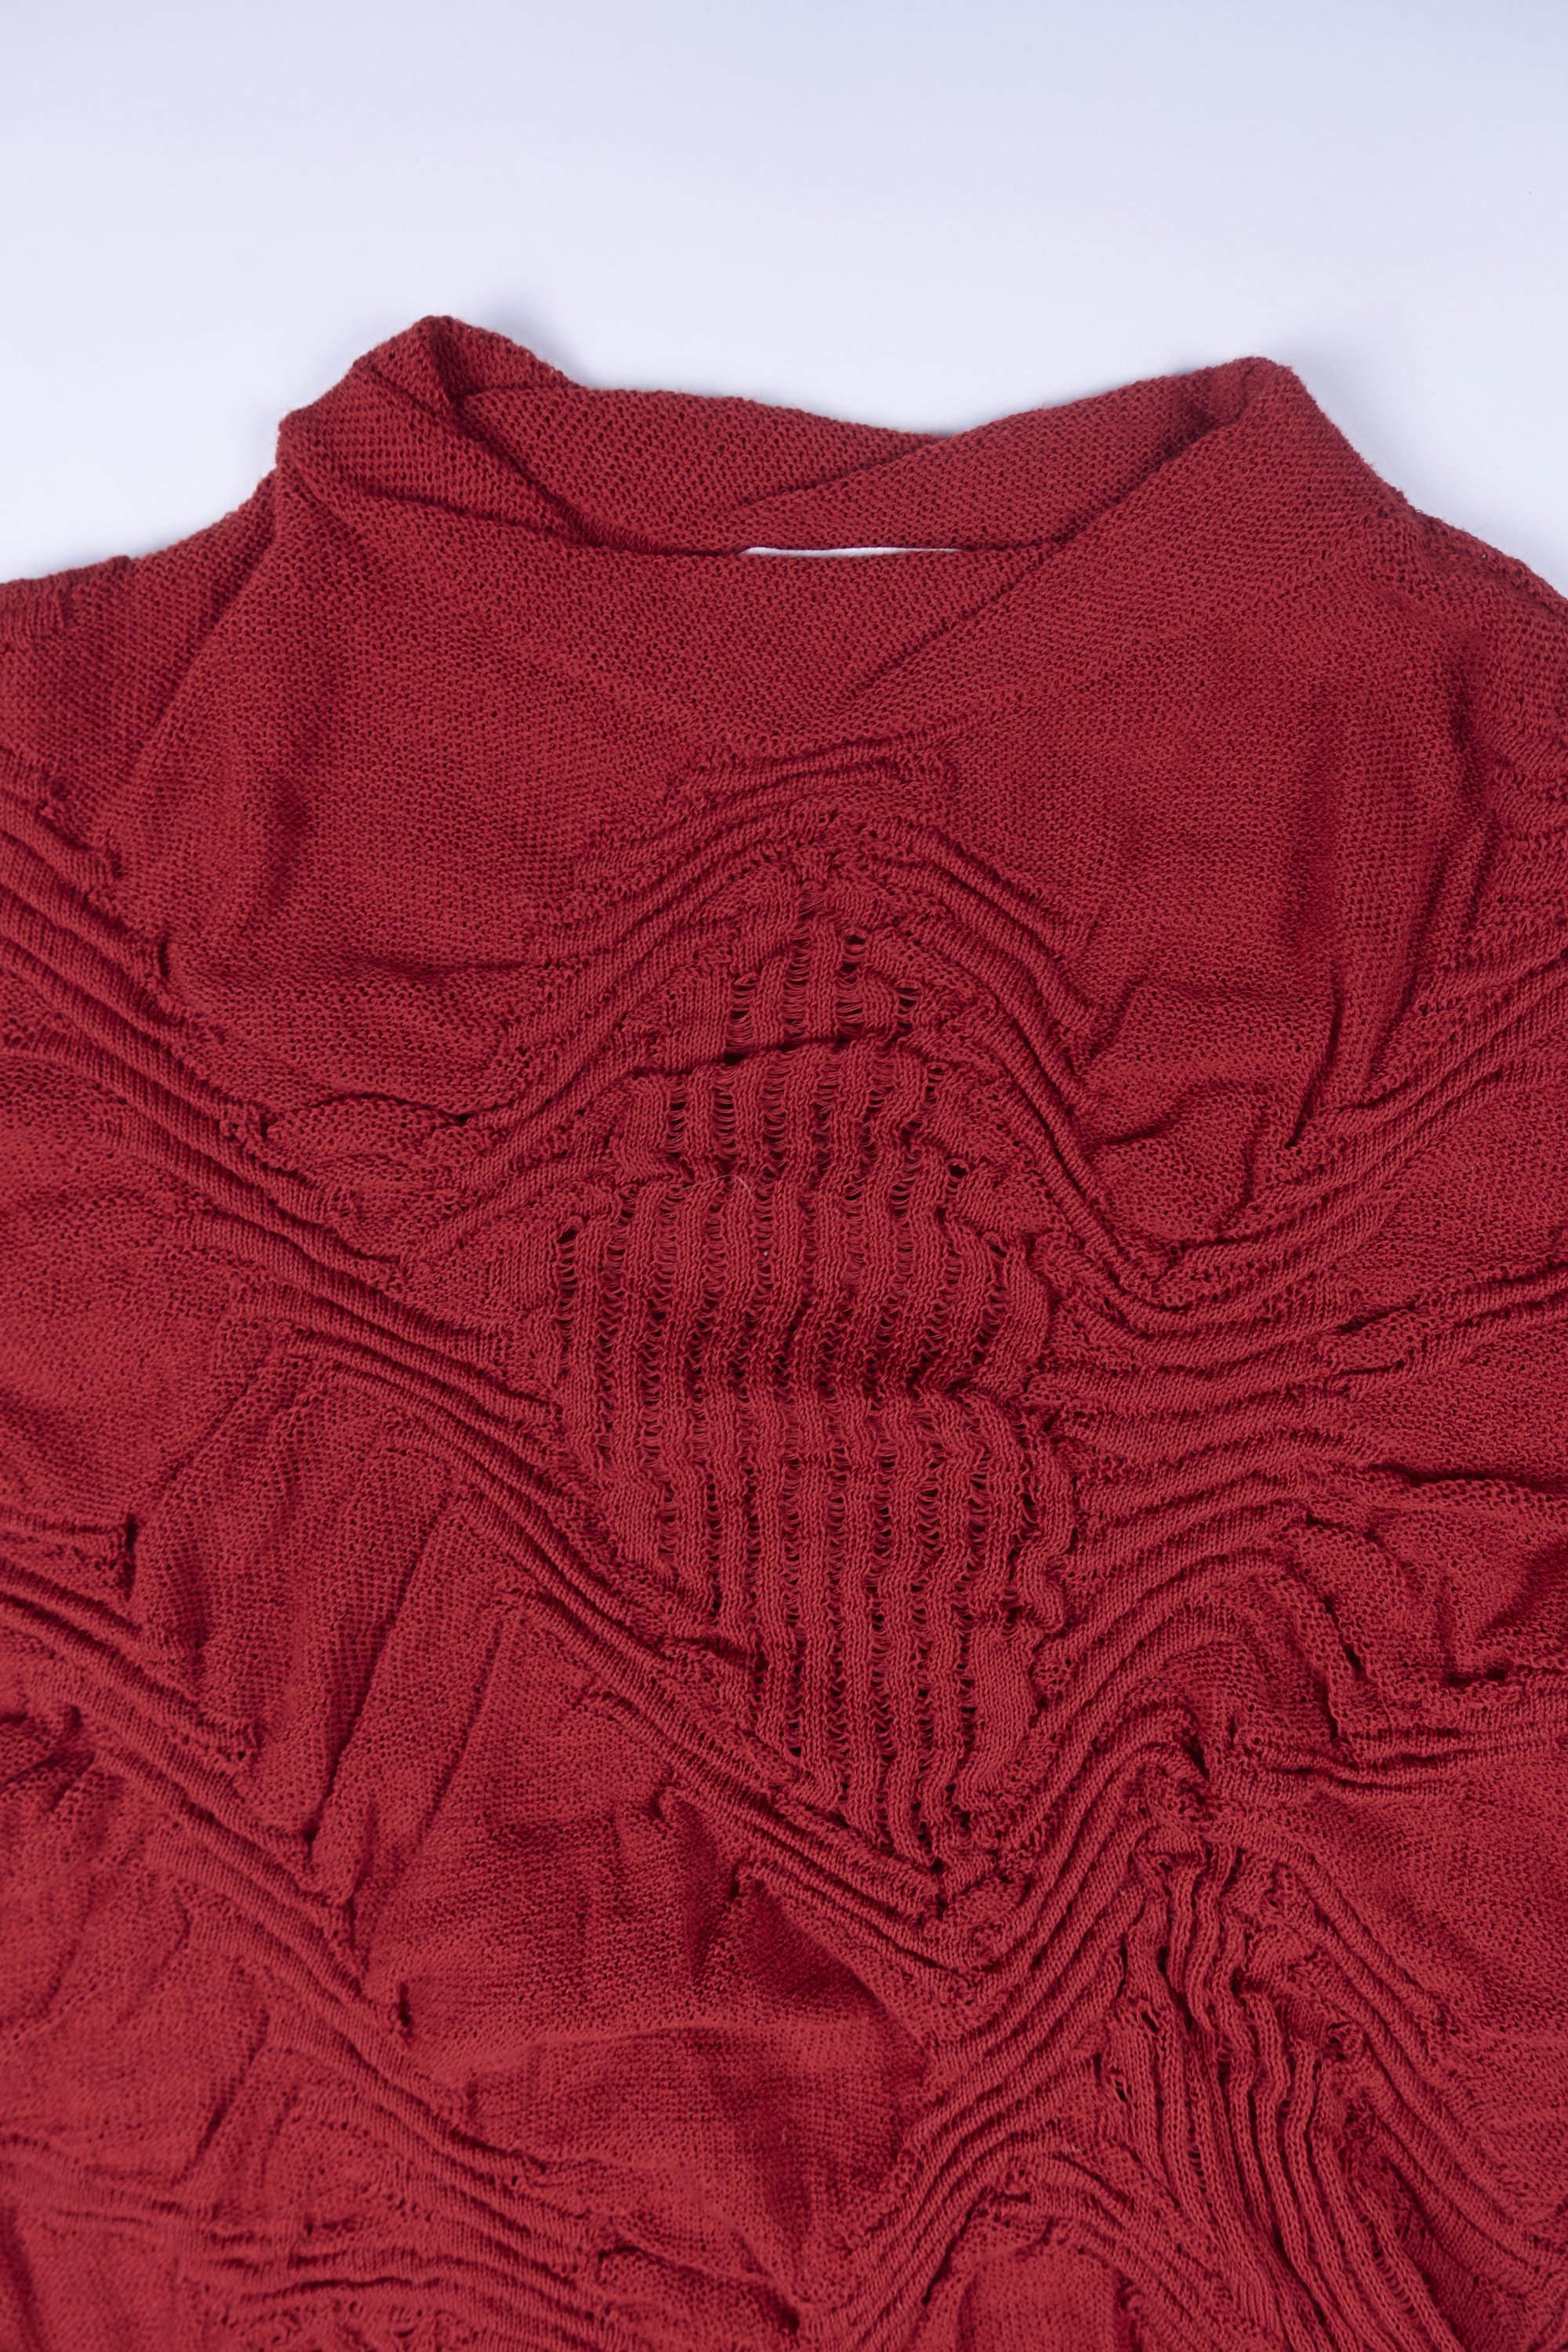 Ficce Uomo Yoshiyuki Konishi wavy distorted knit jumper — a flat shop